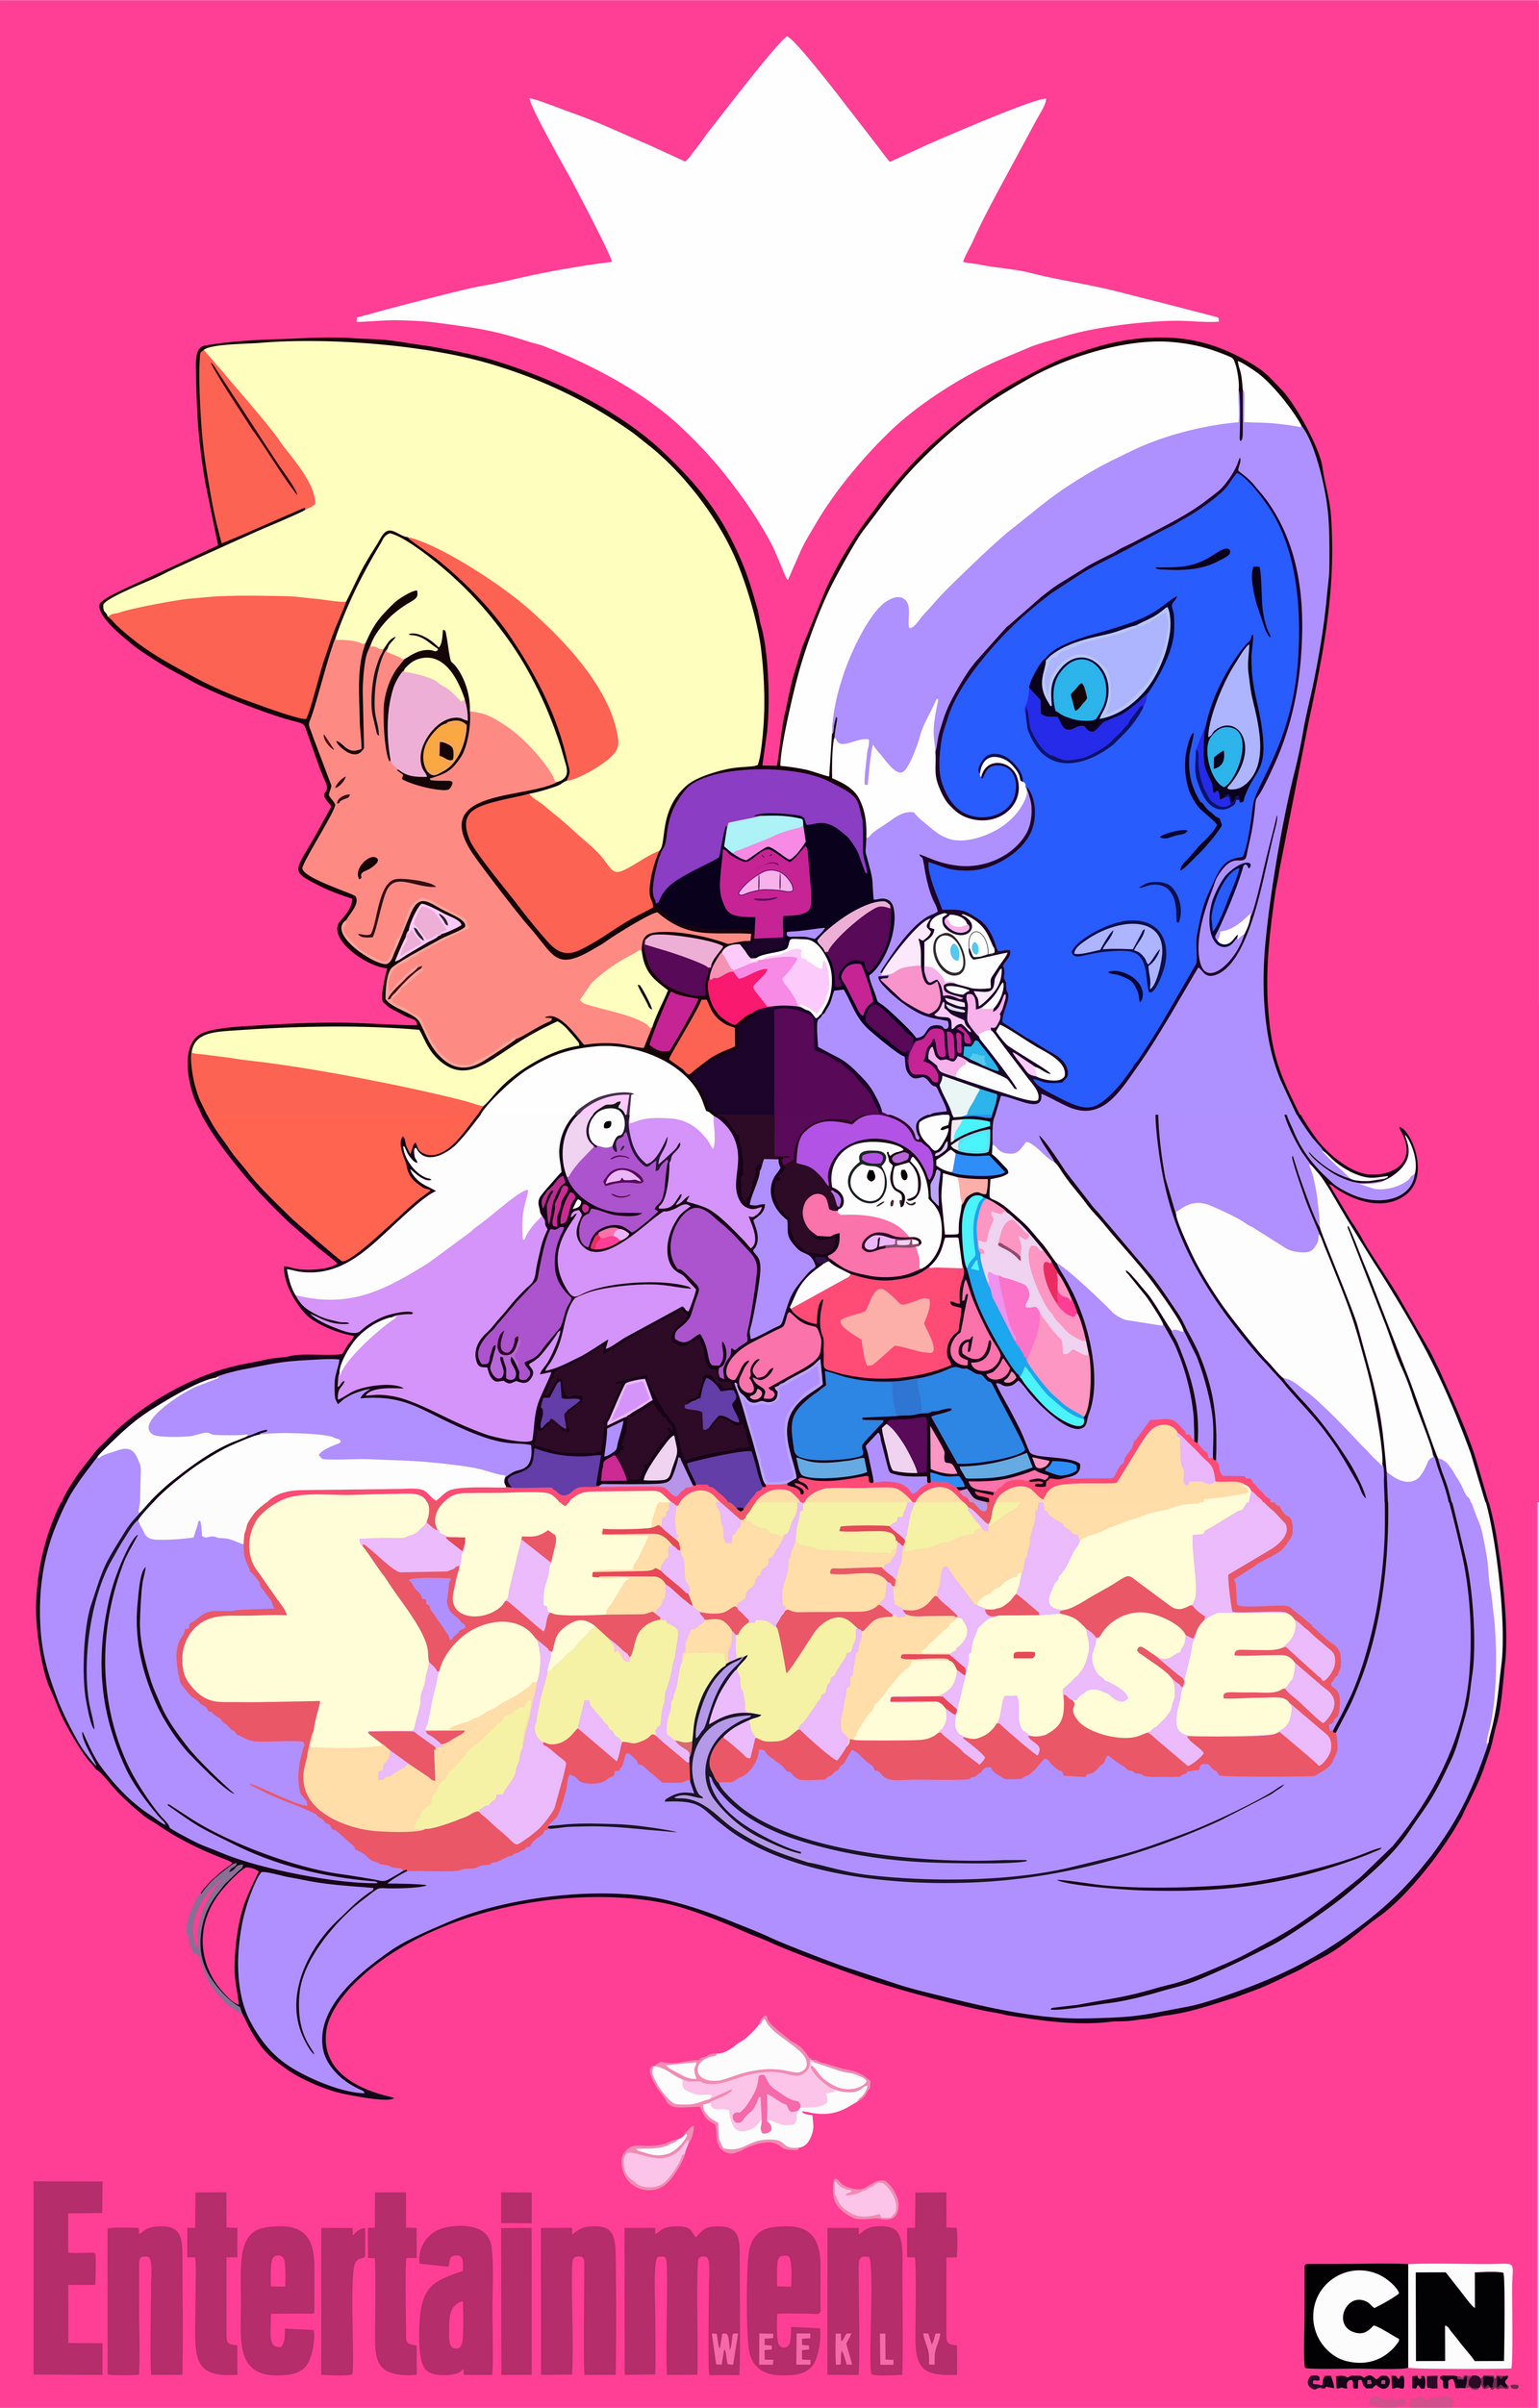 Steven Universe 5ta Temporada Poster by Lg2021art on DeviantArt